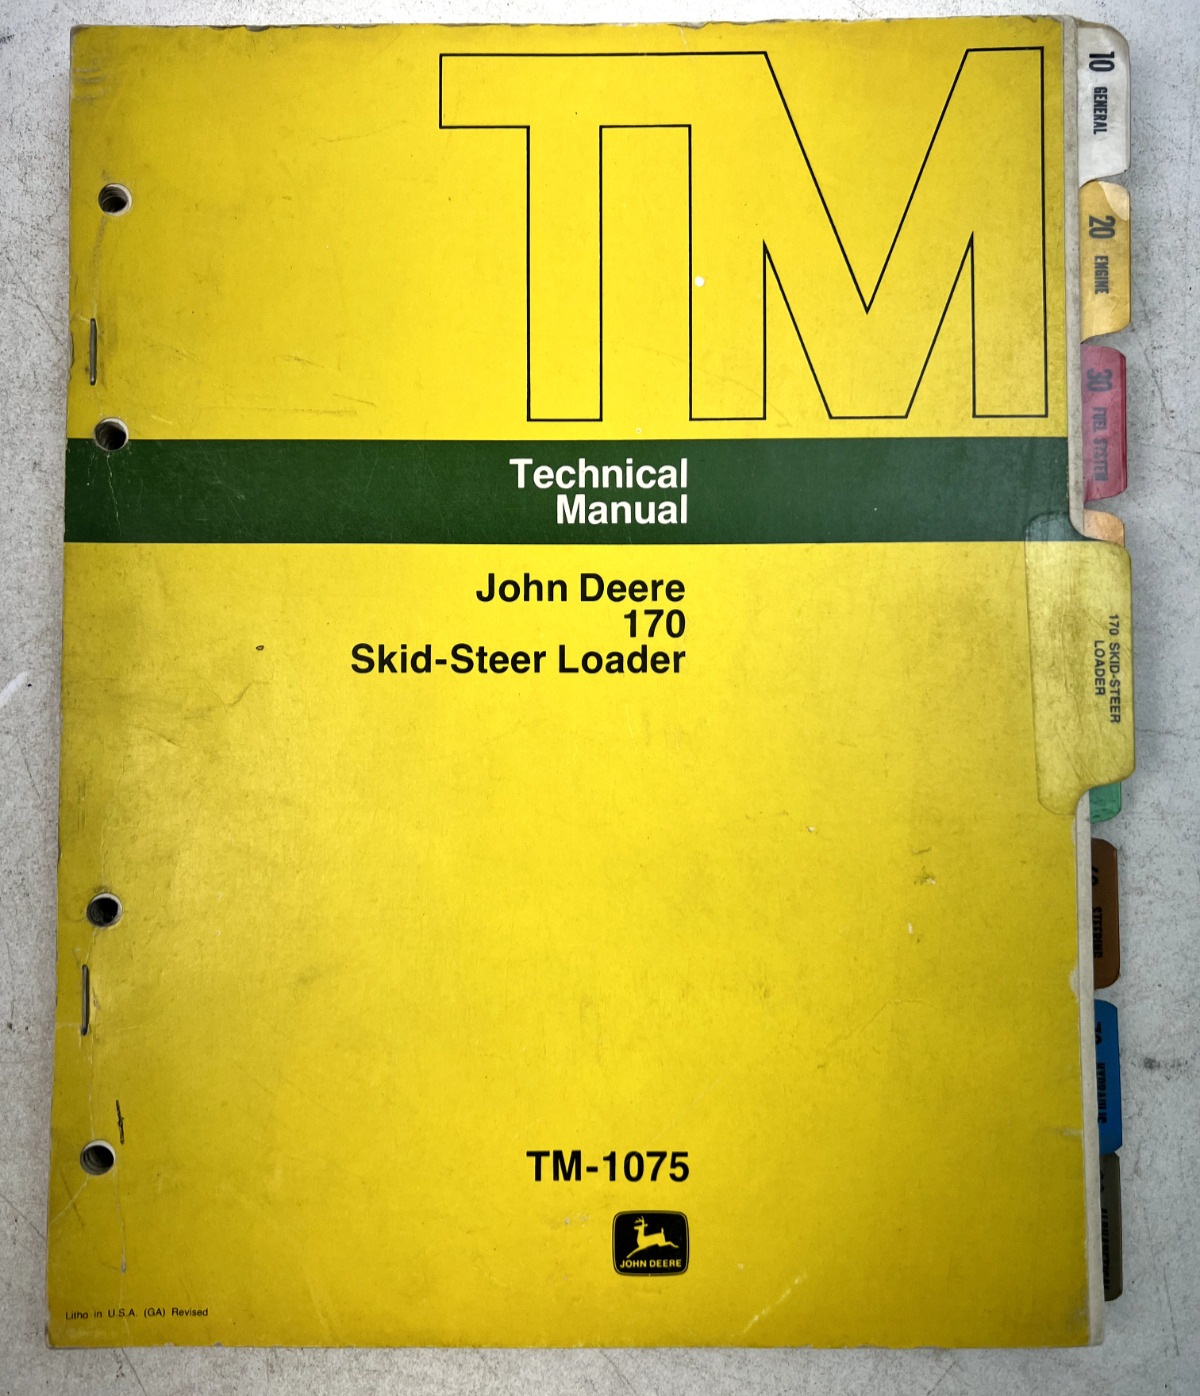 Vintage 1974 John Deere 170 Skid-Steer Loader Technical Manual